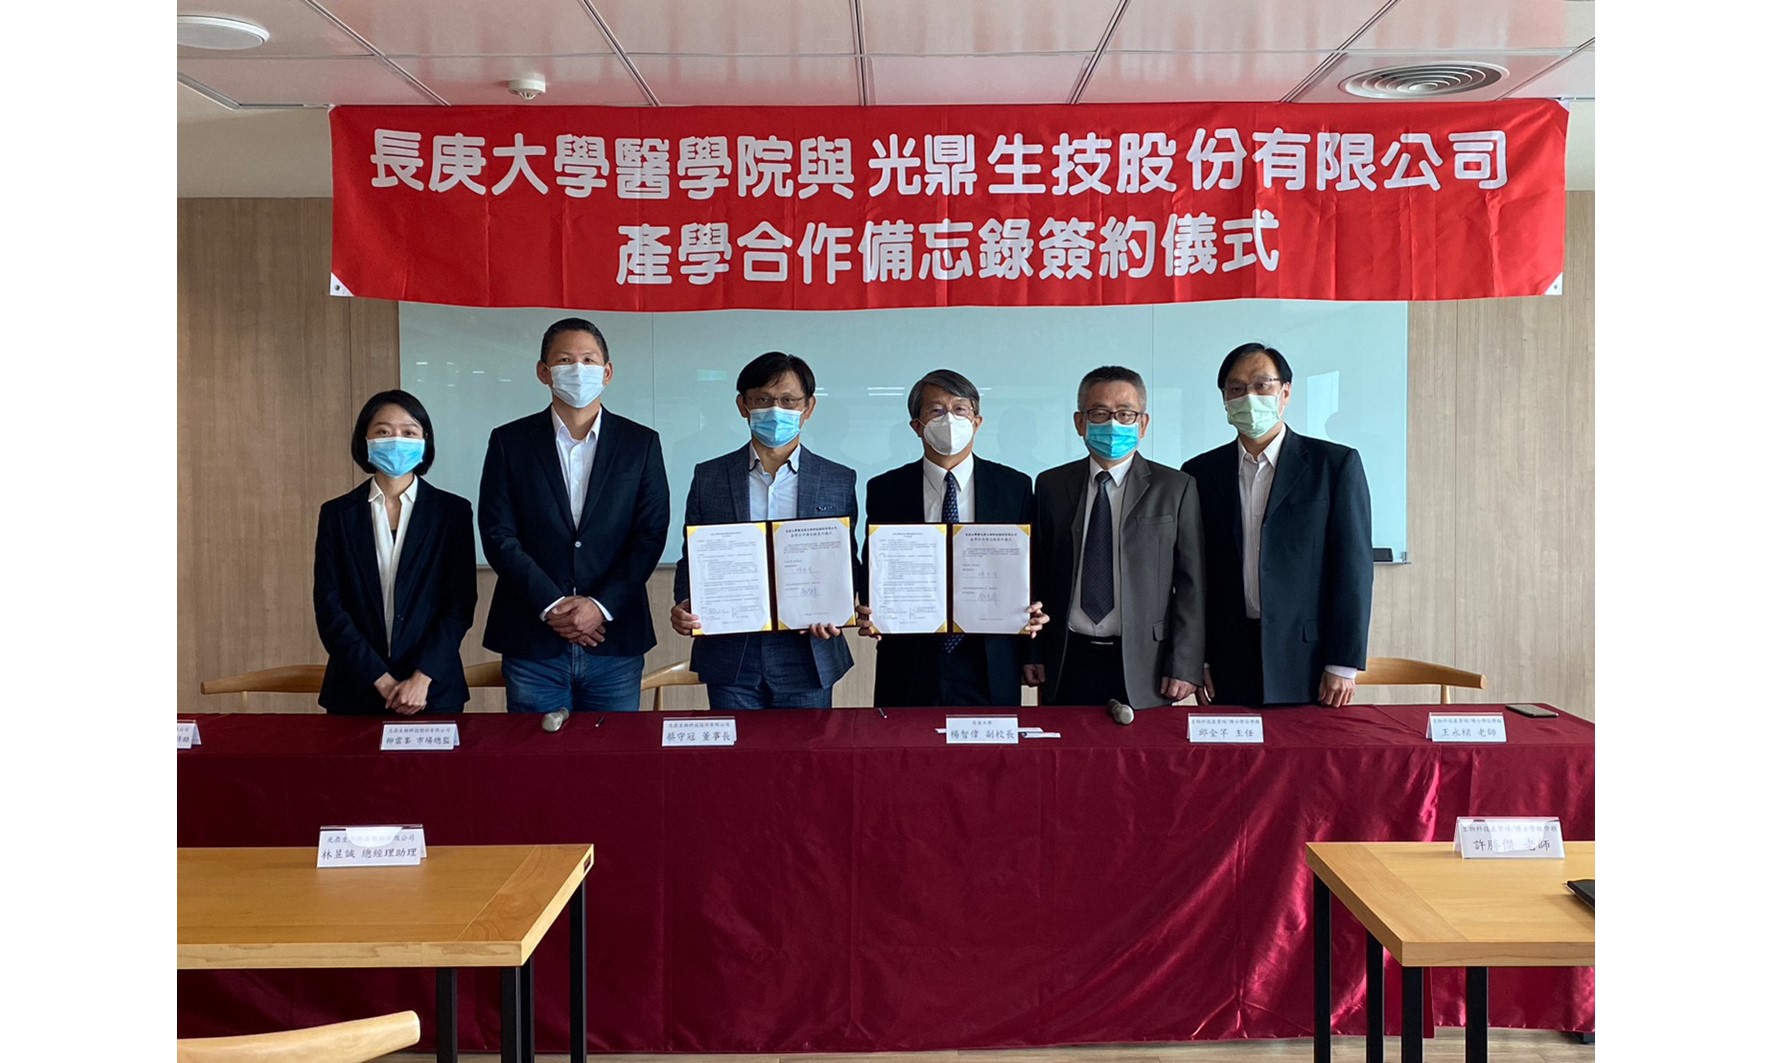 BiOptic has signed memorandum of cooperation with the school of medicine, Chang Gung University